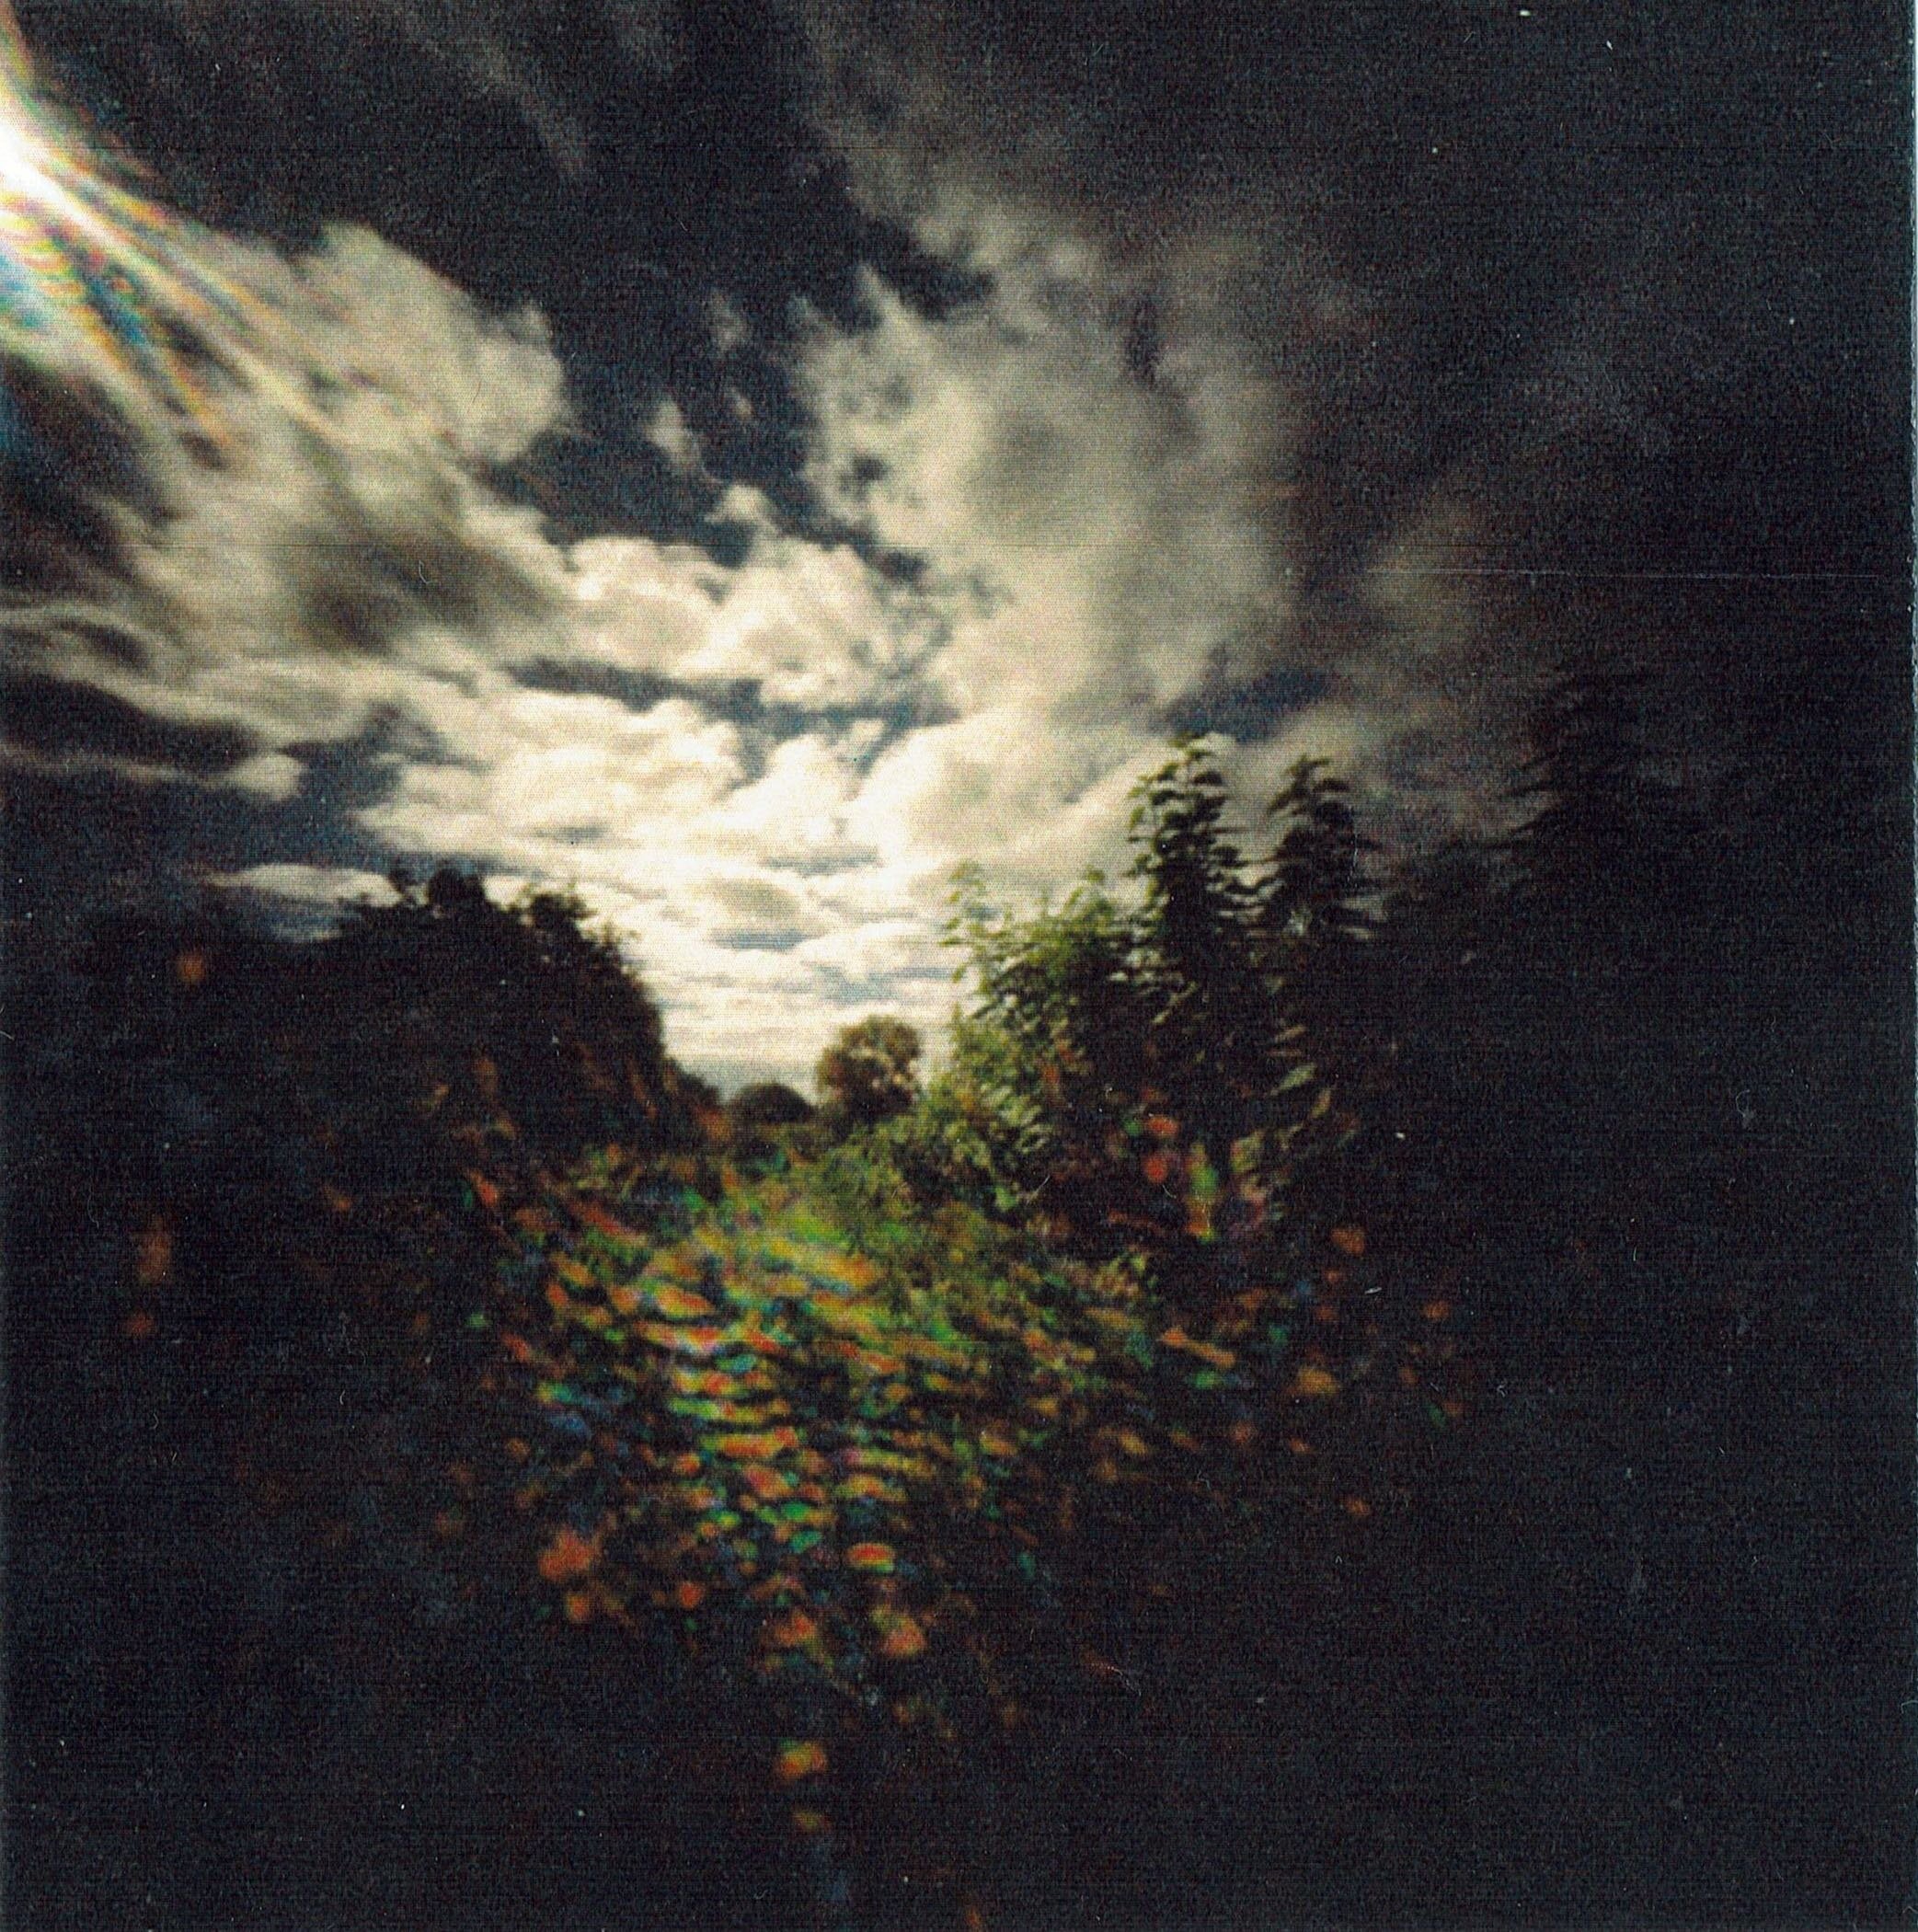 Camera obscura, C-Print, 1999, 30 x 30 cm